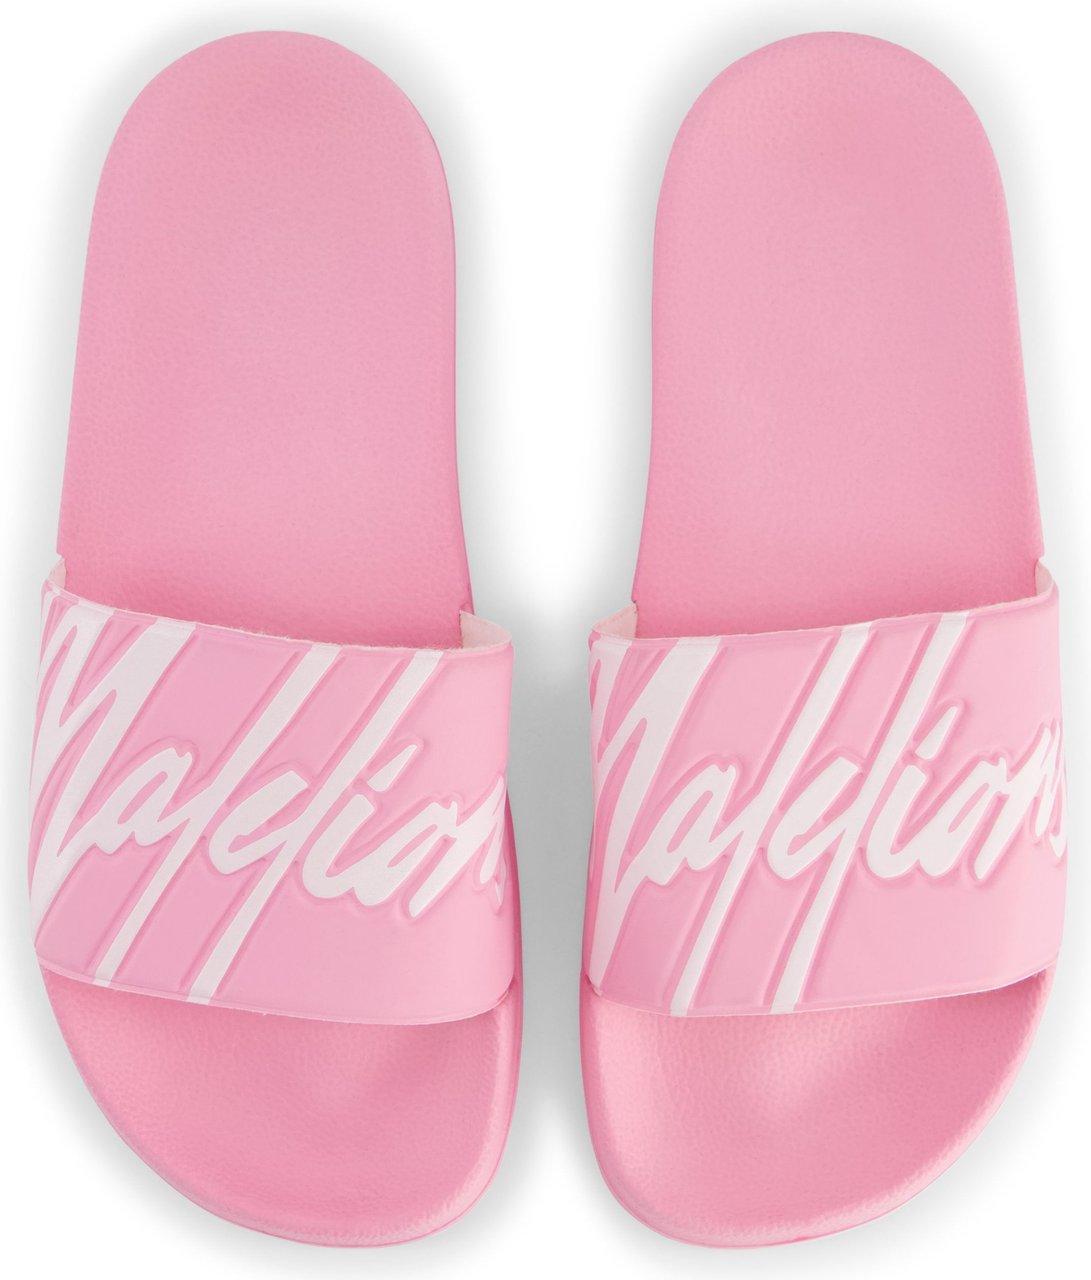 Malelions Signature Slides - Pink/White Roze